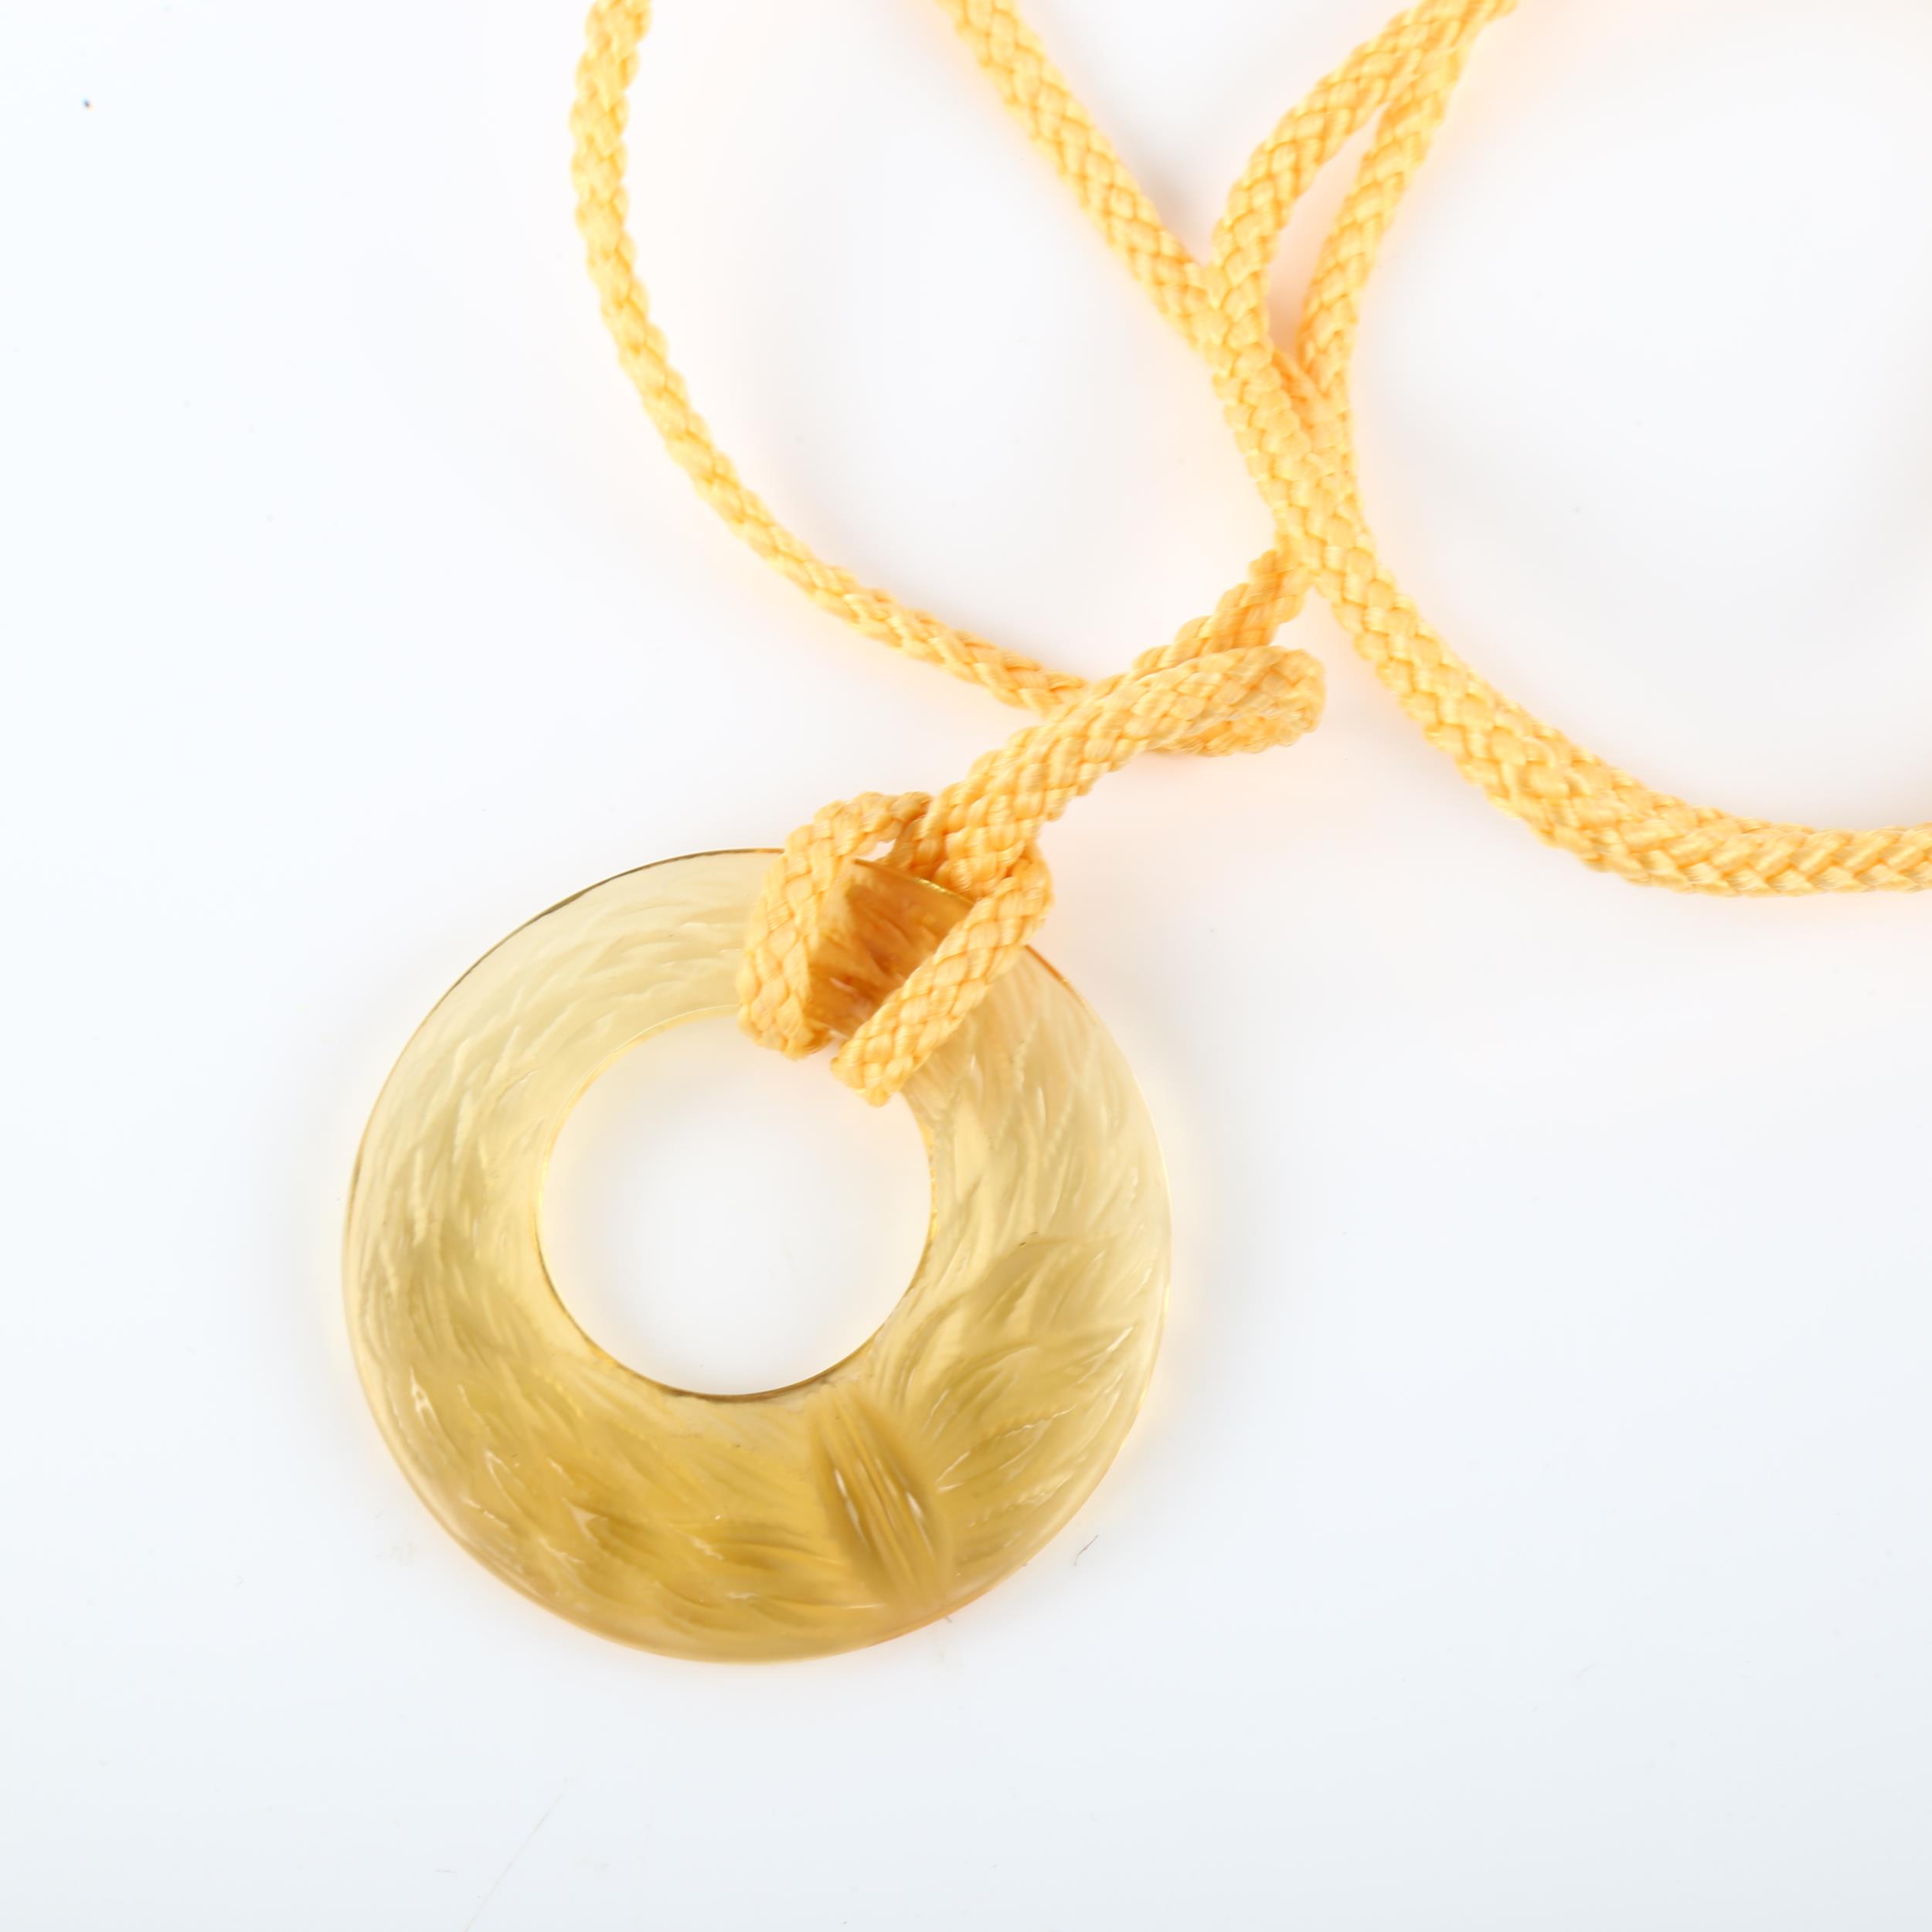 LALIQUE - an amber glass laurel wreath disc pendant, signed Lalique France, diameter 44.1mm, 14. - Image 5 of 6